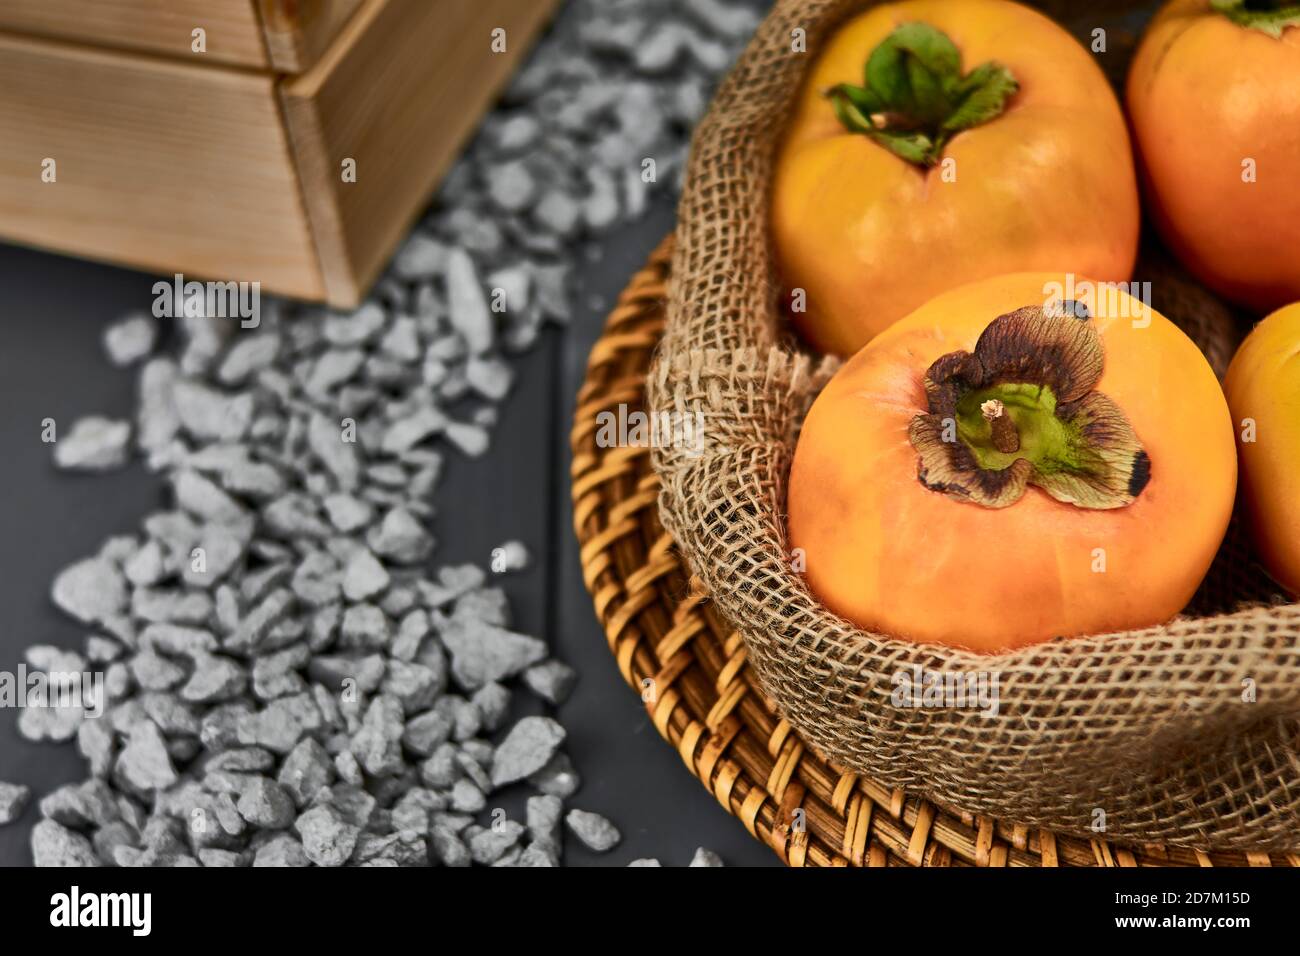 Sack of delicious persimmons. Autumn fruit. kakis. wooden box. stones. gray and orange tones Stock Photo